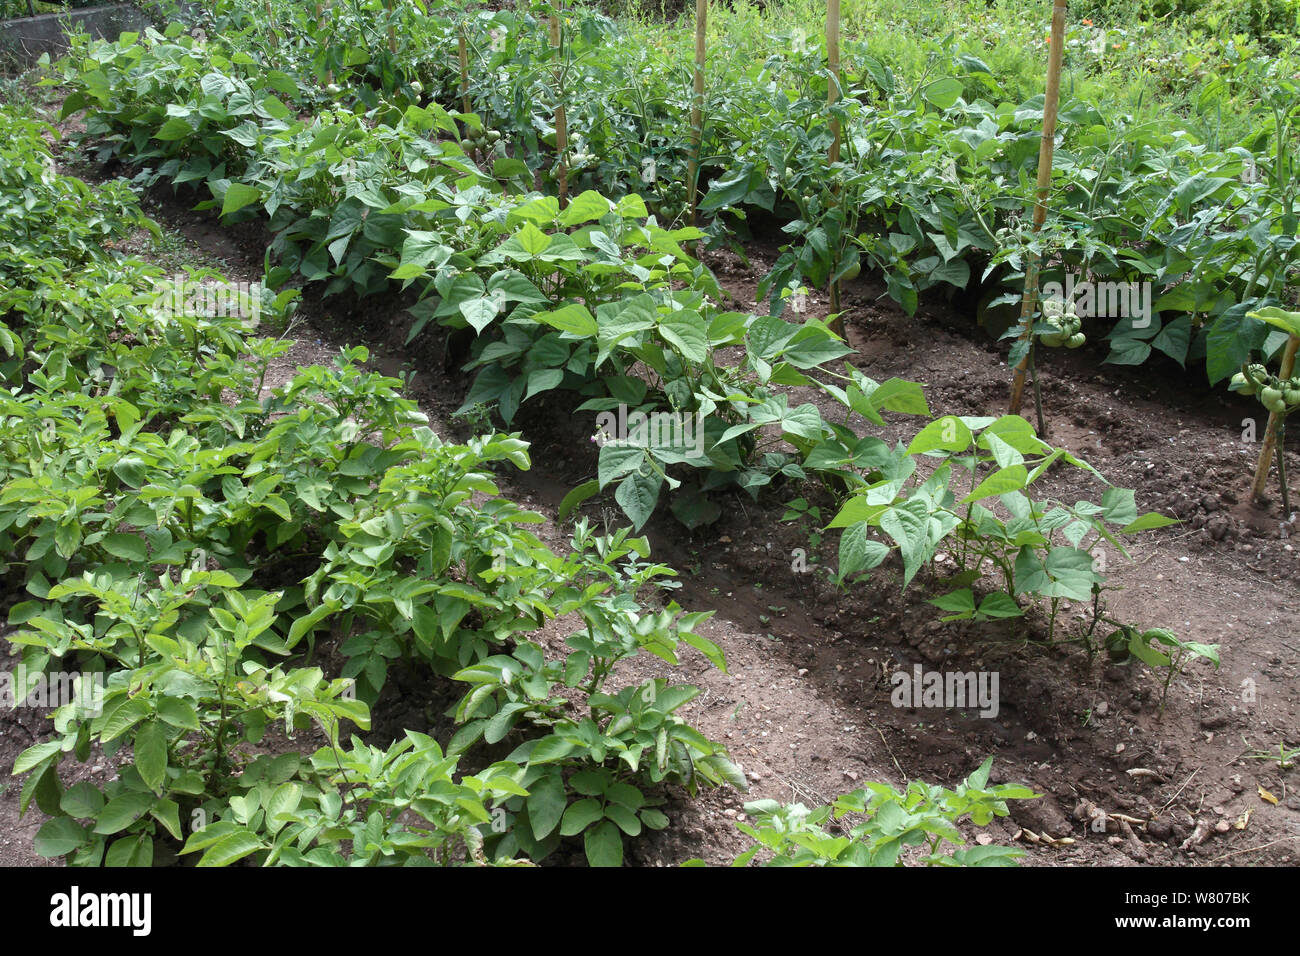 Vegetables growing in rows in an organic garden, Potatoes (Solanum tuberosum), Tomatoes (Solanum lycopersicum), Green beans (Phaseolus vulgaris), Var, Provence, France, June. Stock Photo